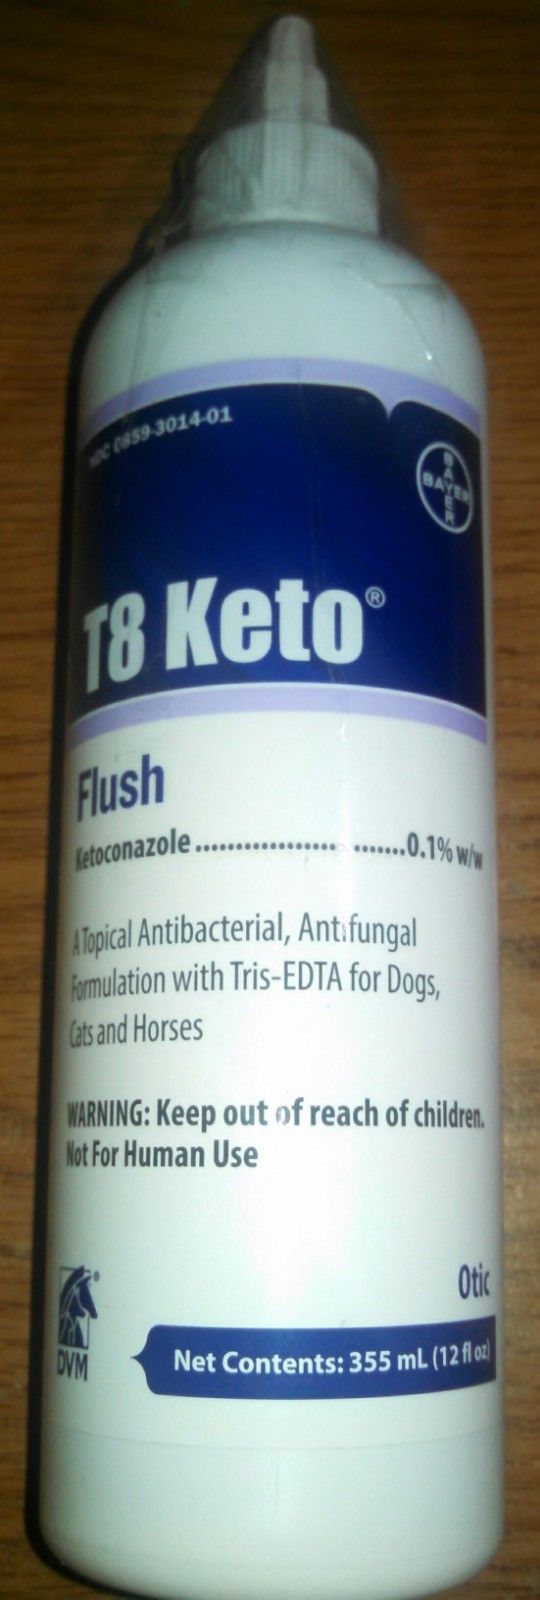 ?? T8 Keto Flush Topical Antibacterial Antifungal Dogs & Cats 12 oz ??